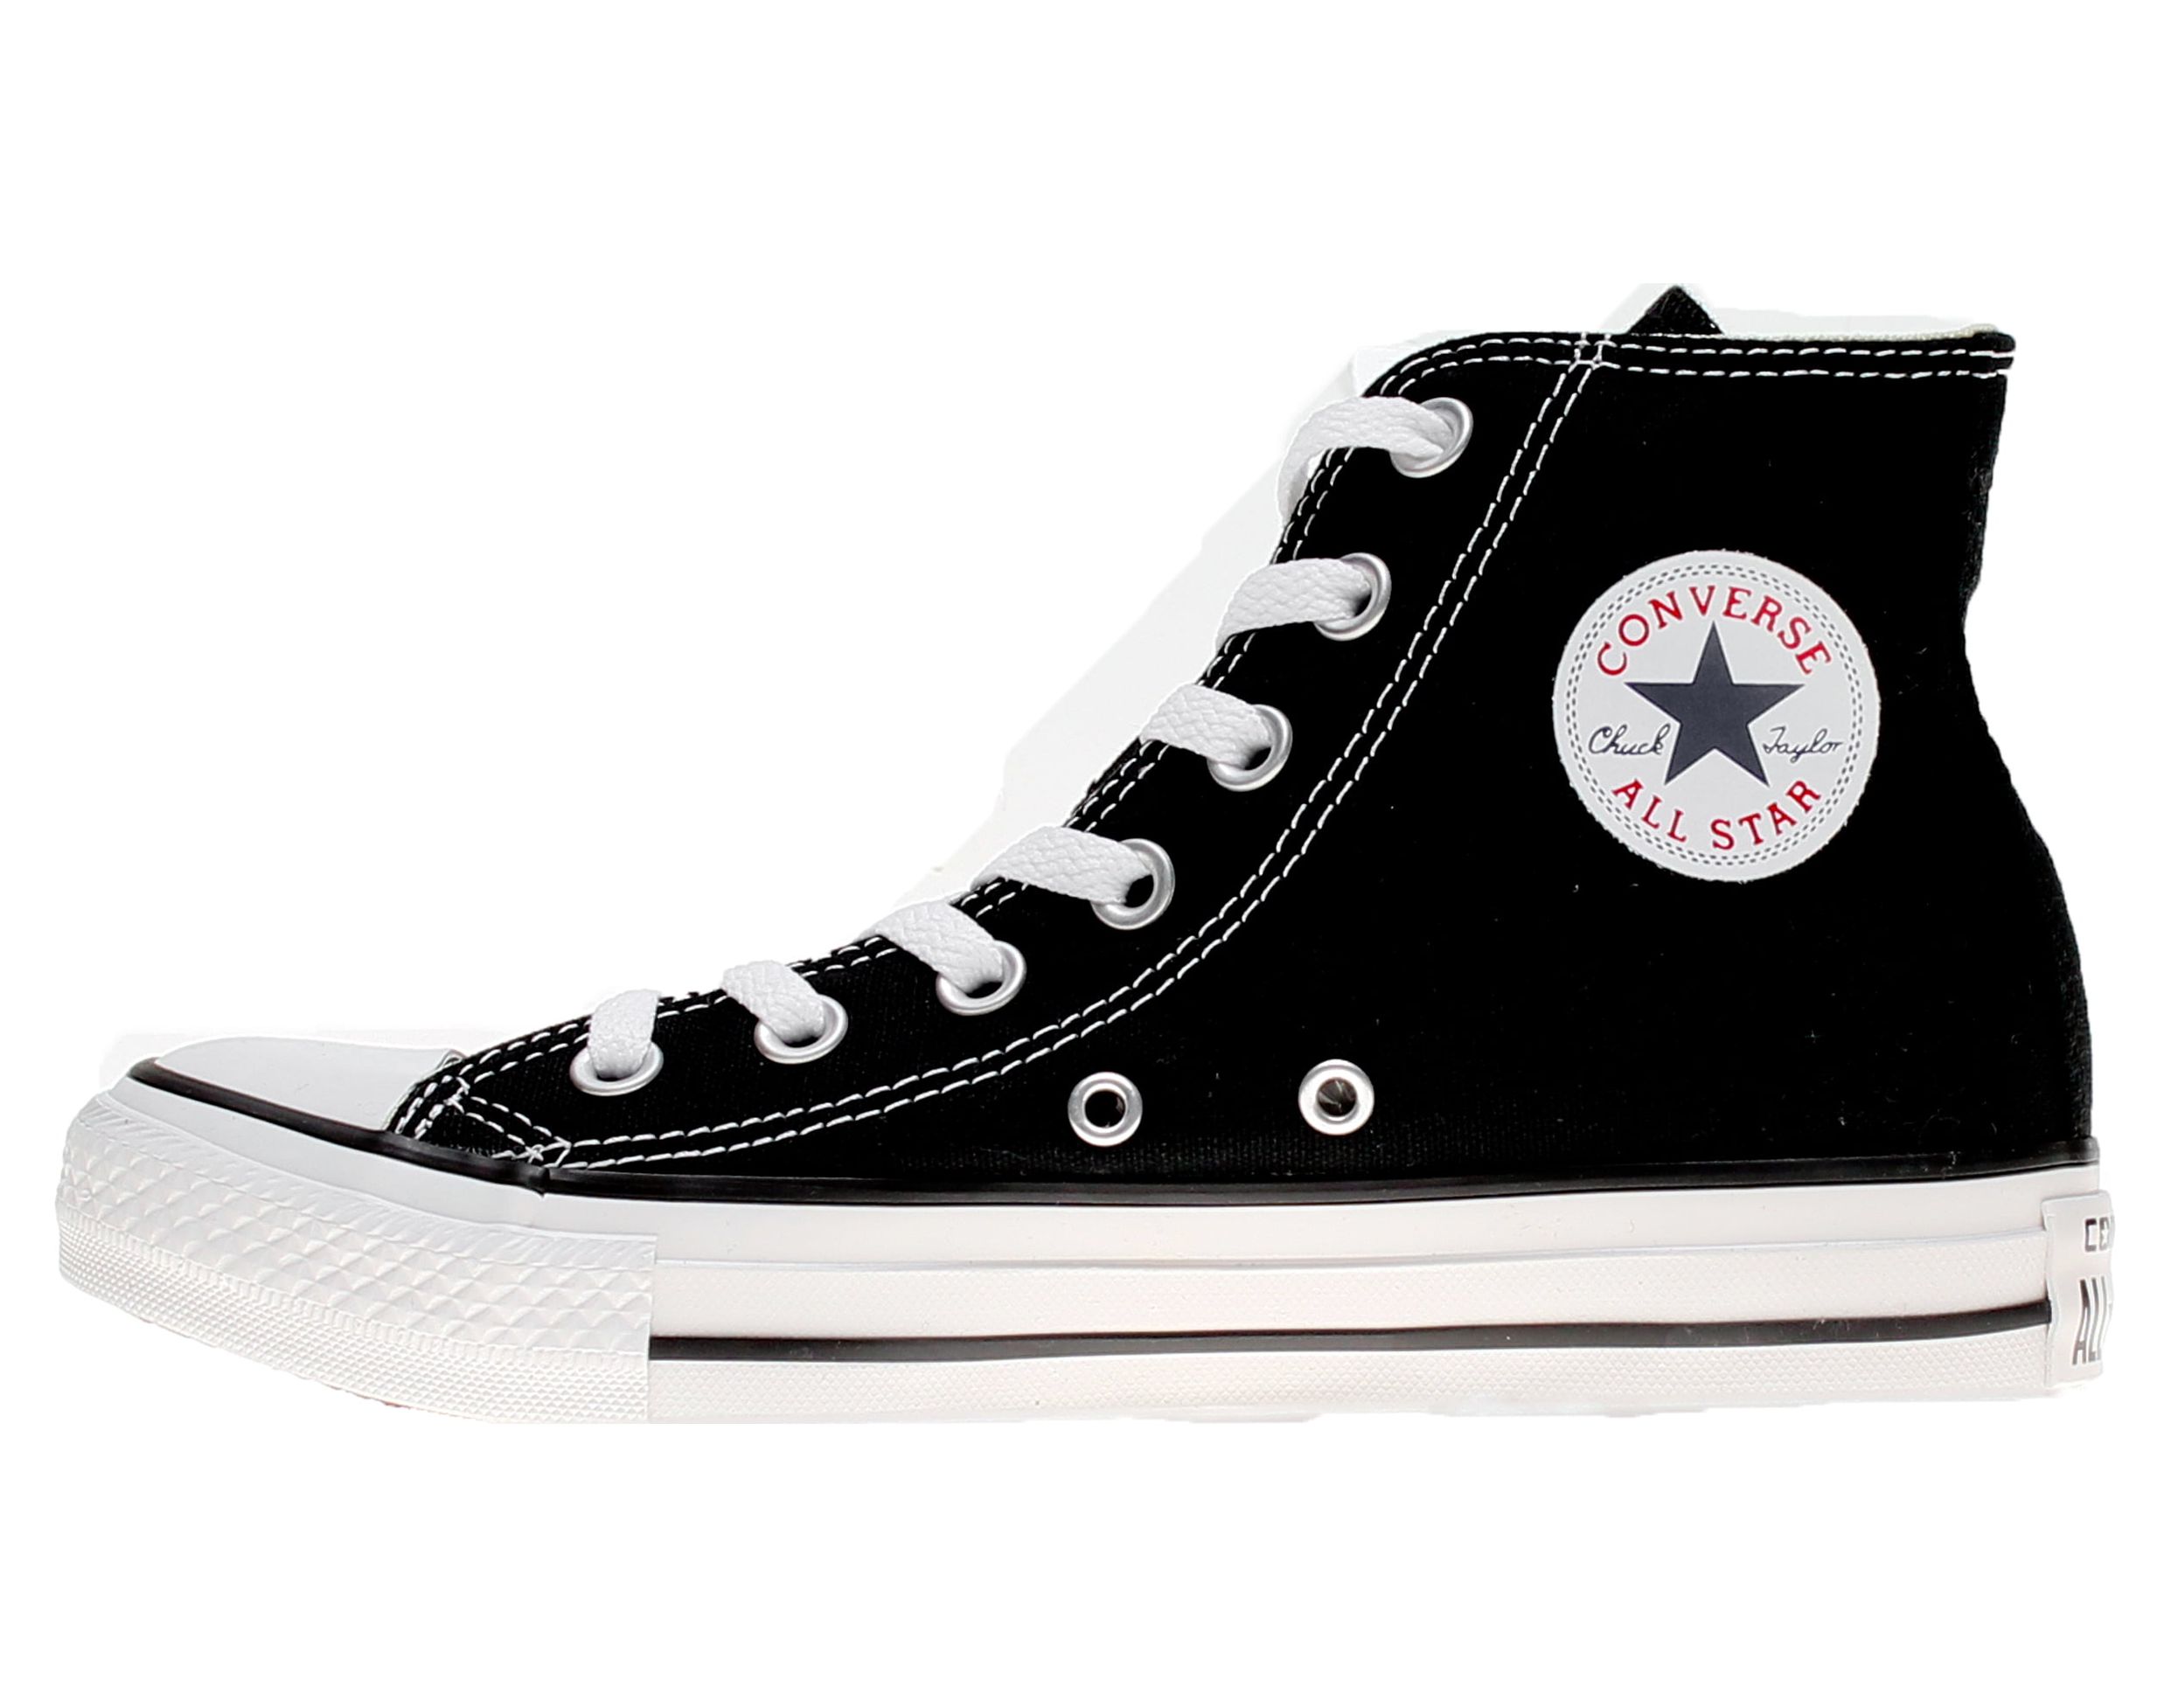 Converse M9160: Chuck Taylor All Star High Top Unisex Black White Sneakers (6 US Men 8 US Women 6 UK 39 EU, Black White) - image 3 of 6